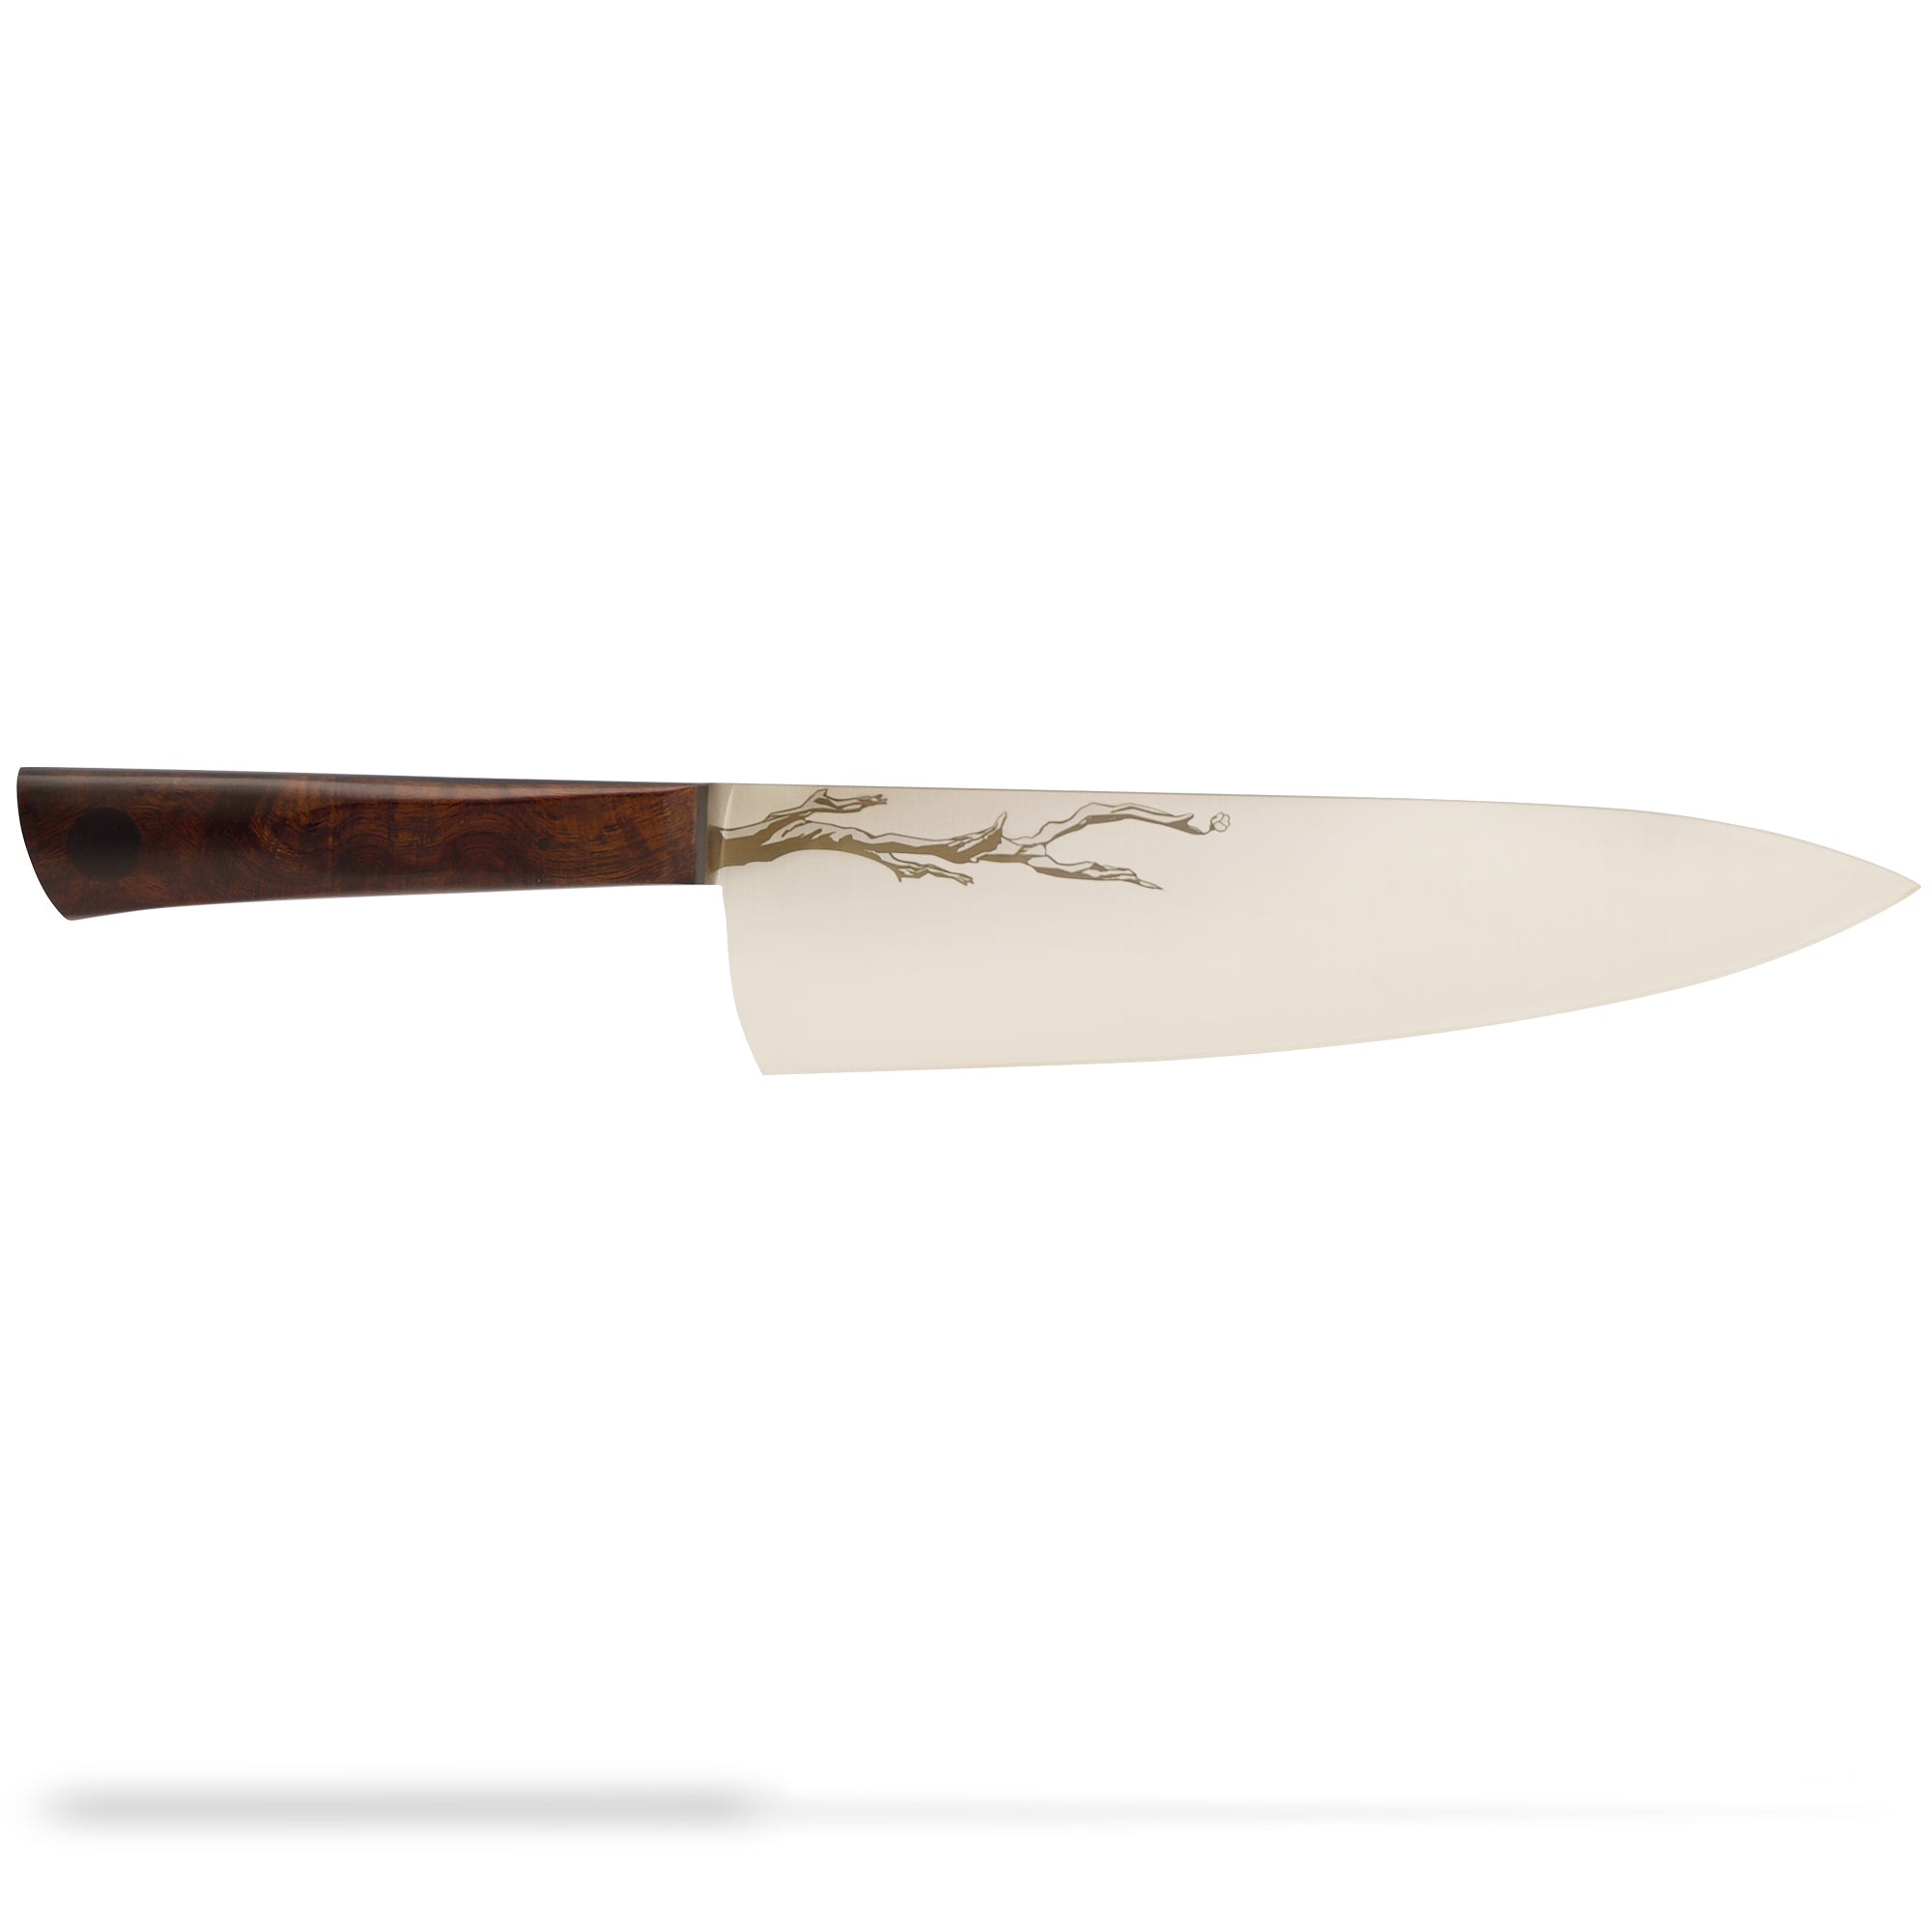 Town Cutler Olneya 8.5" Chef Knife with Desert Ironwood branch engraved on backside of knife blade.